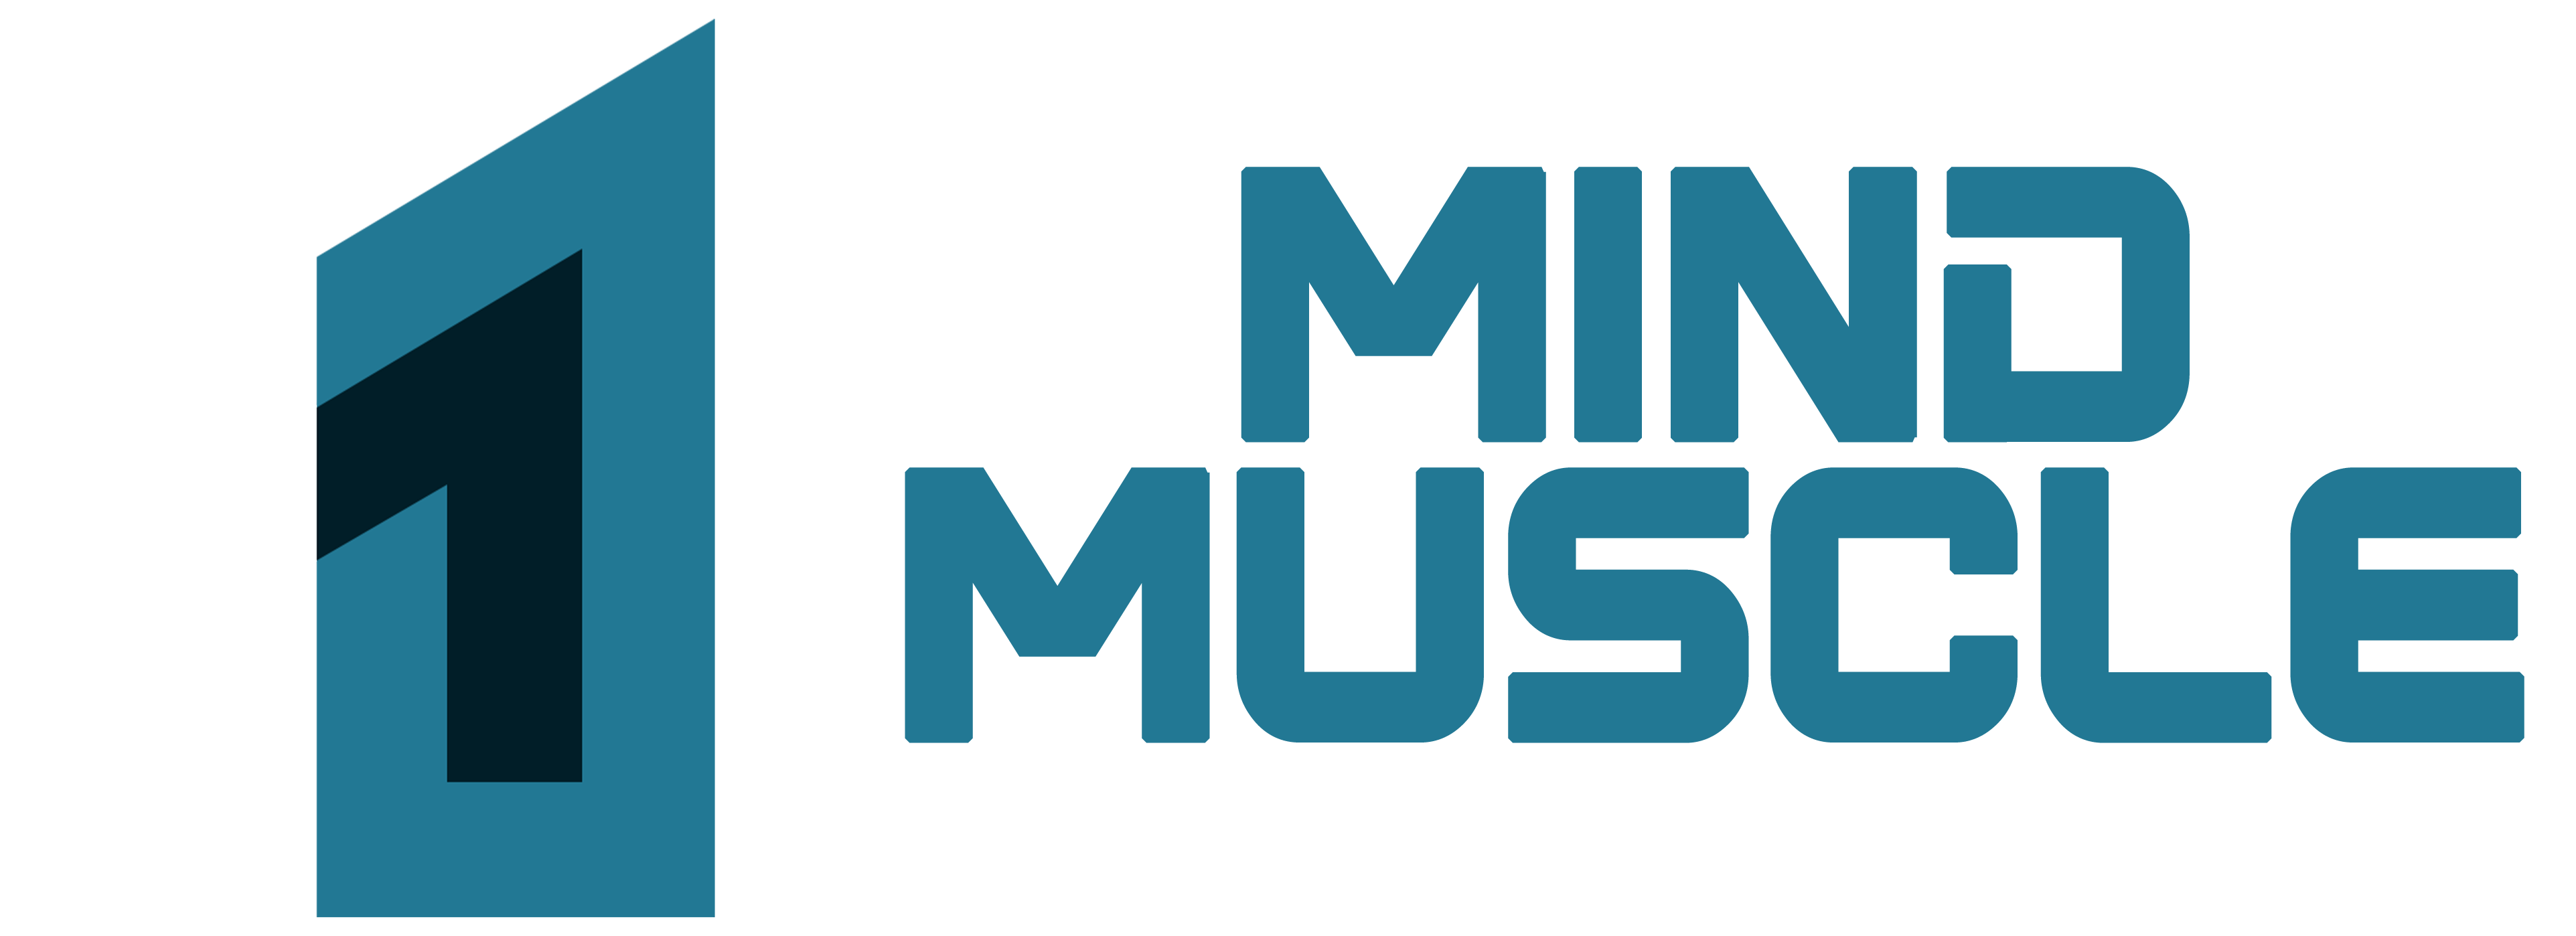 1Mind1Muscle LLC